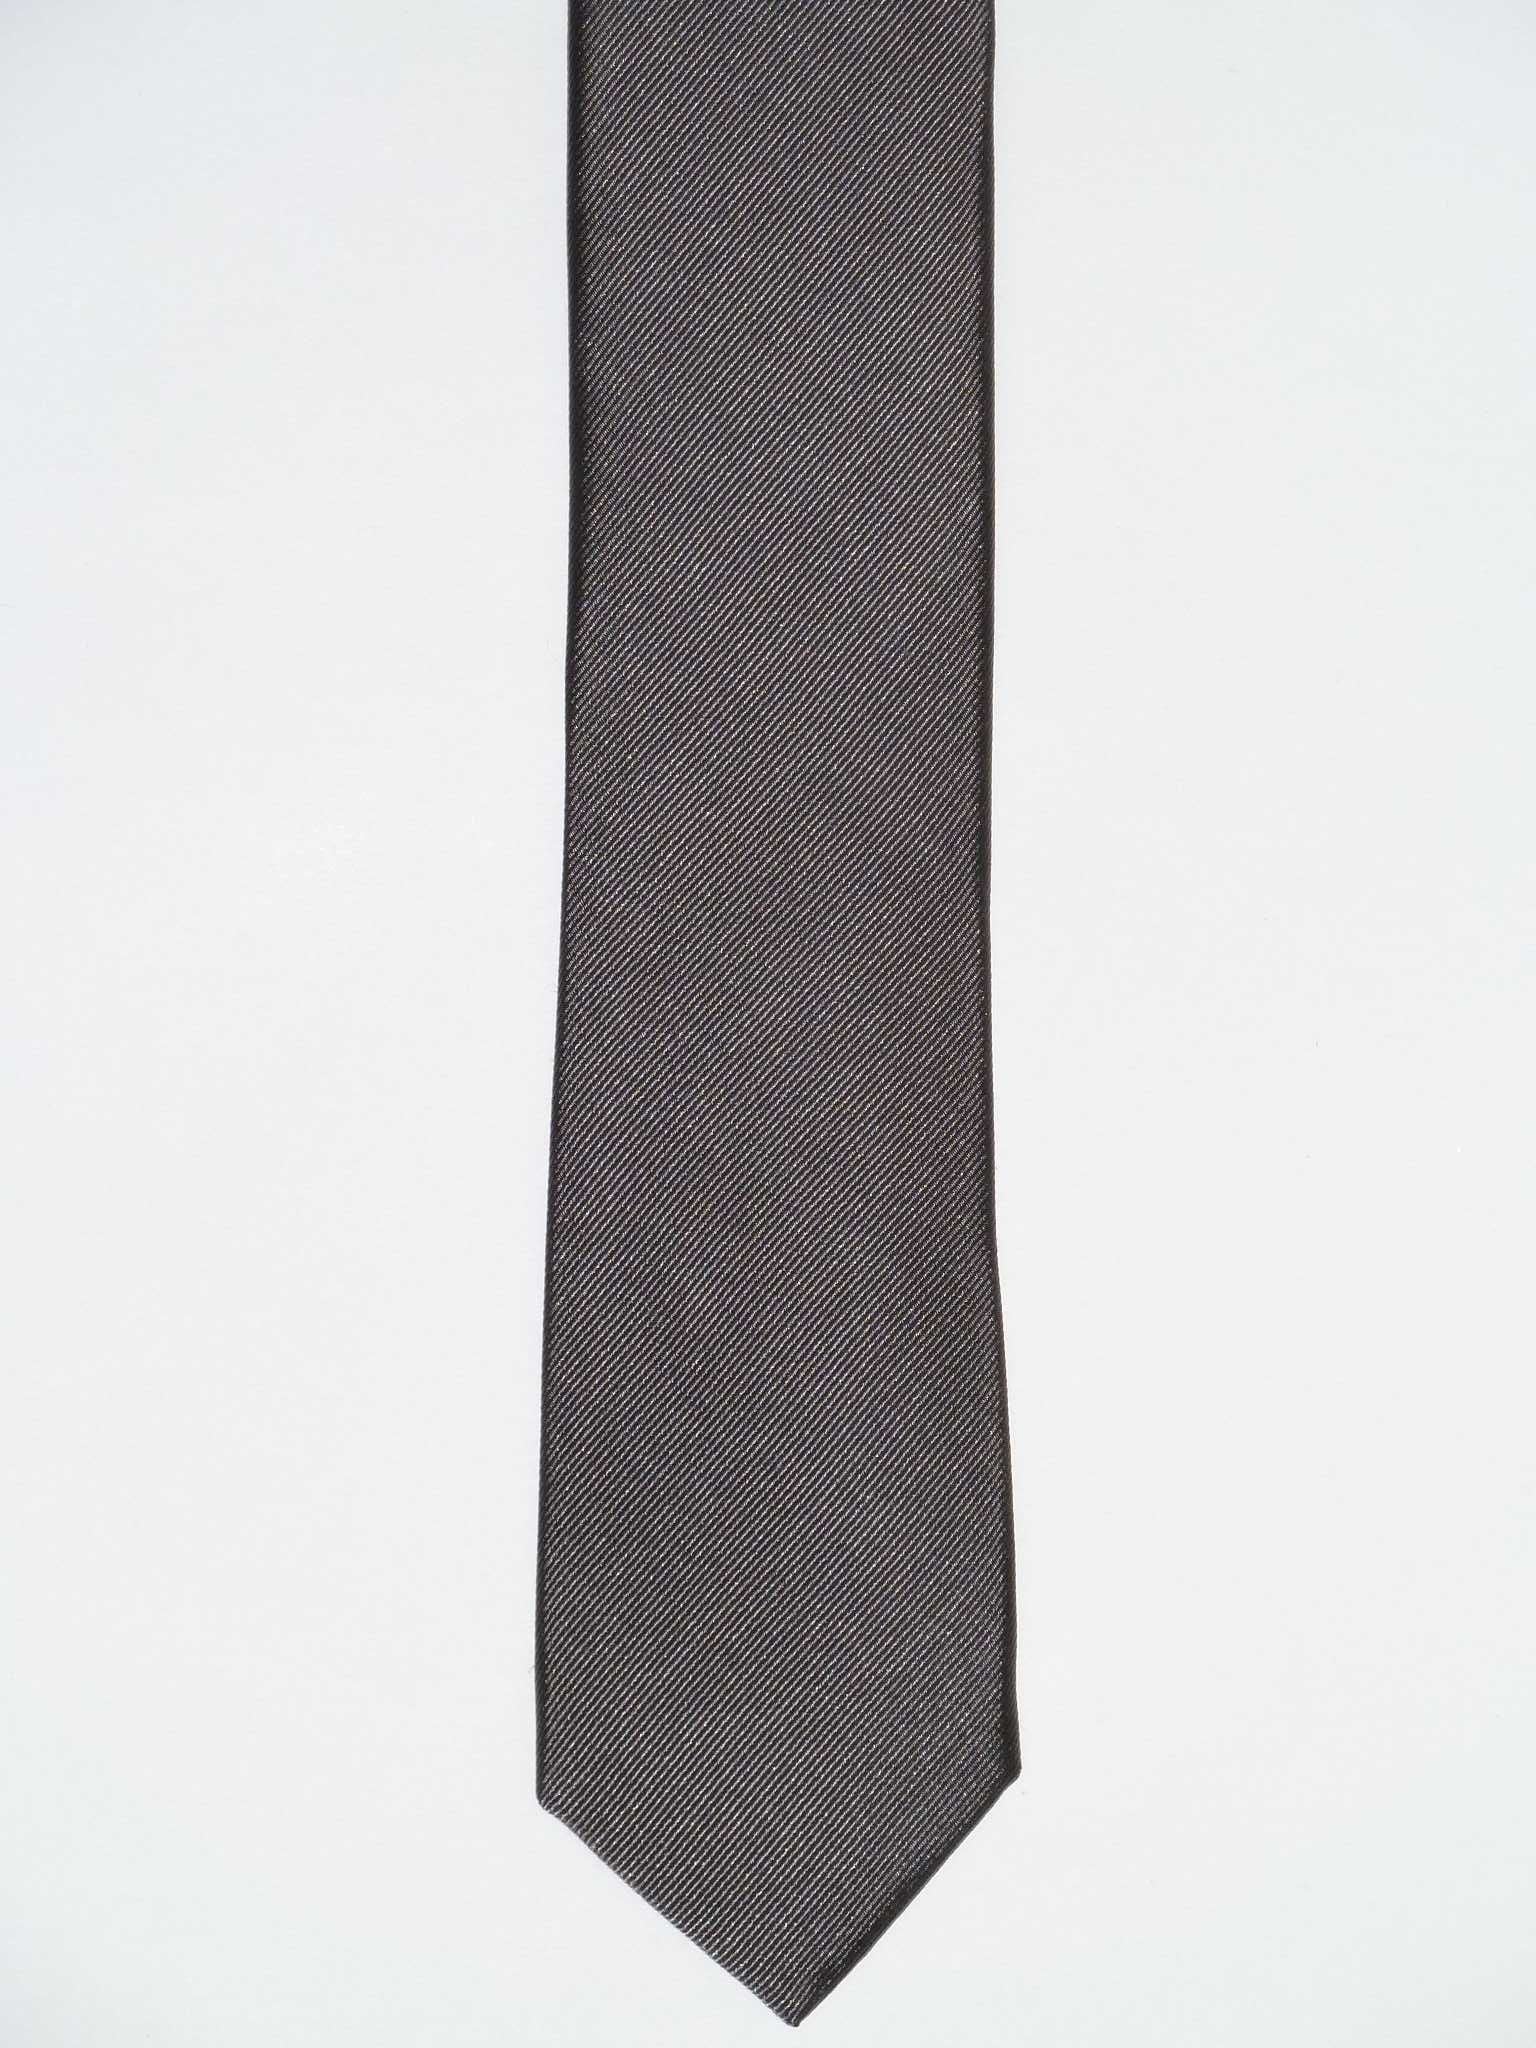 Krawatte, 100% Seide, 6cm slim, Ripps, Grau – MAICA Krawattenfabrik